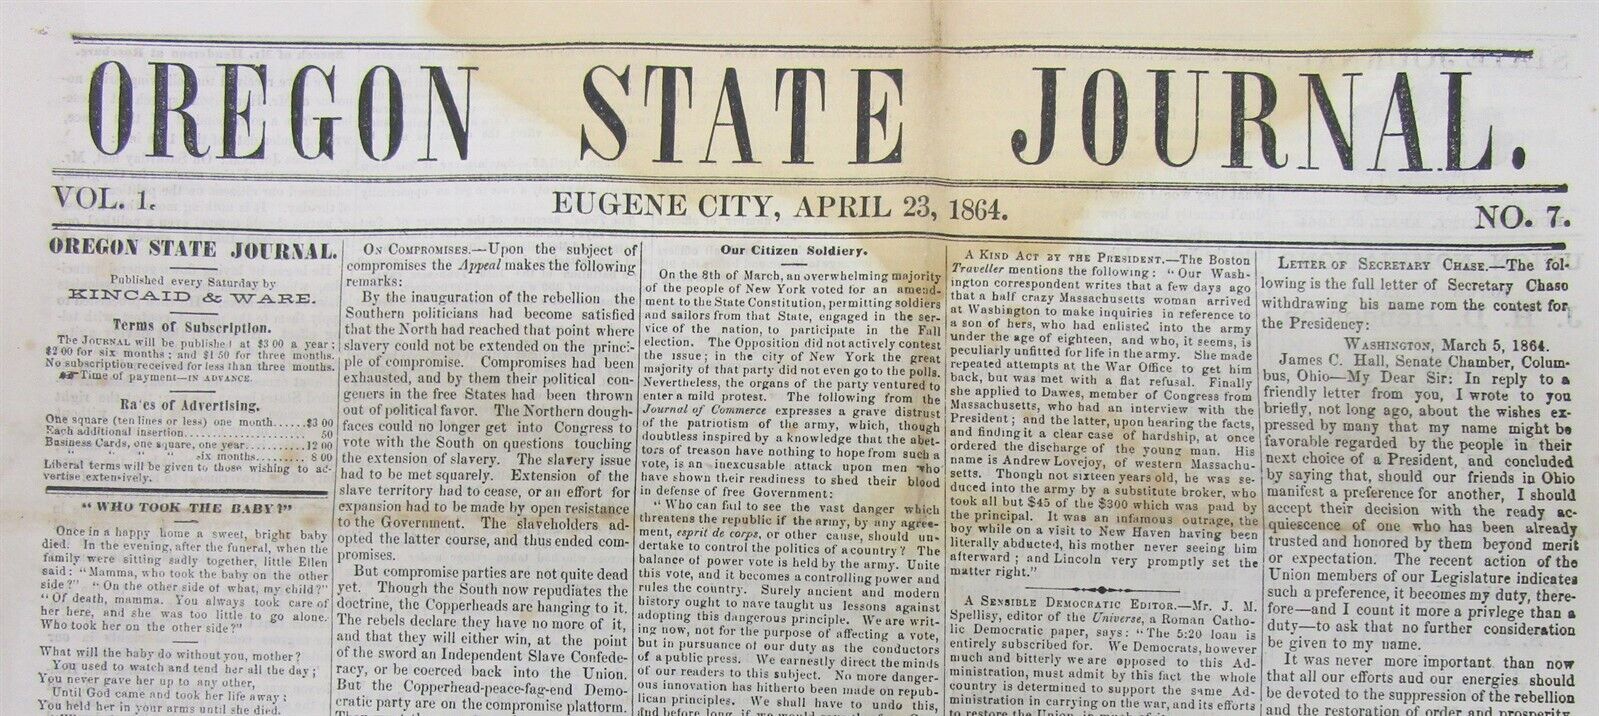 Rare original 1864 OREGON STATE JOURNAL newspaper Volume I # 7 issue EUGENE CITY